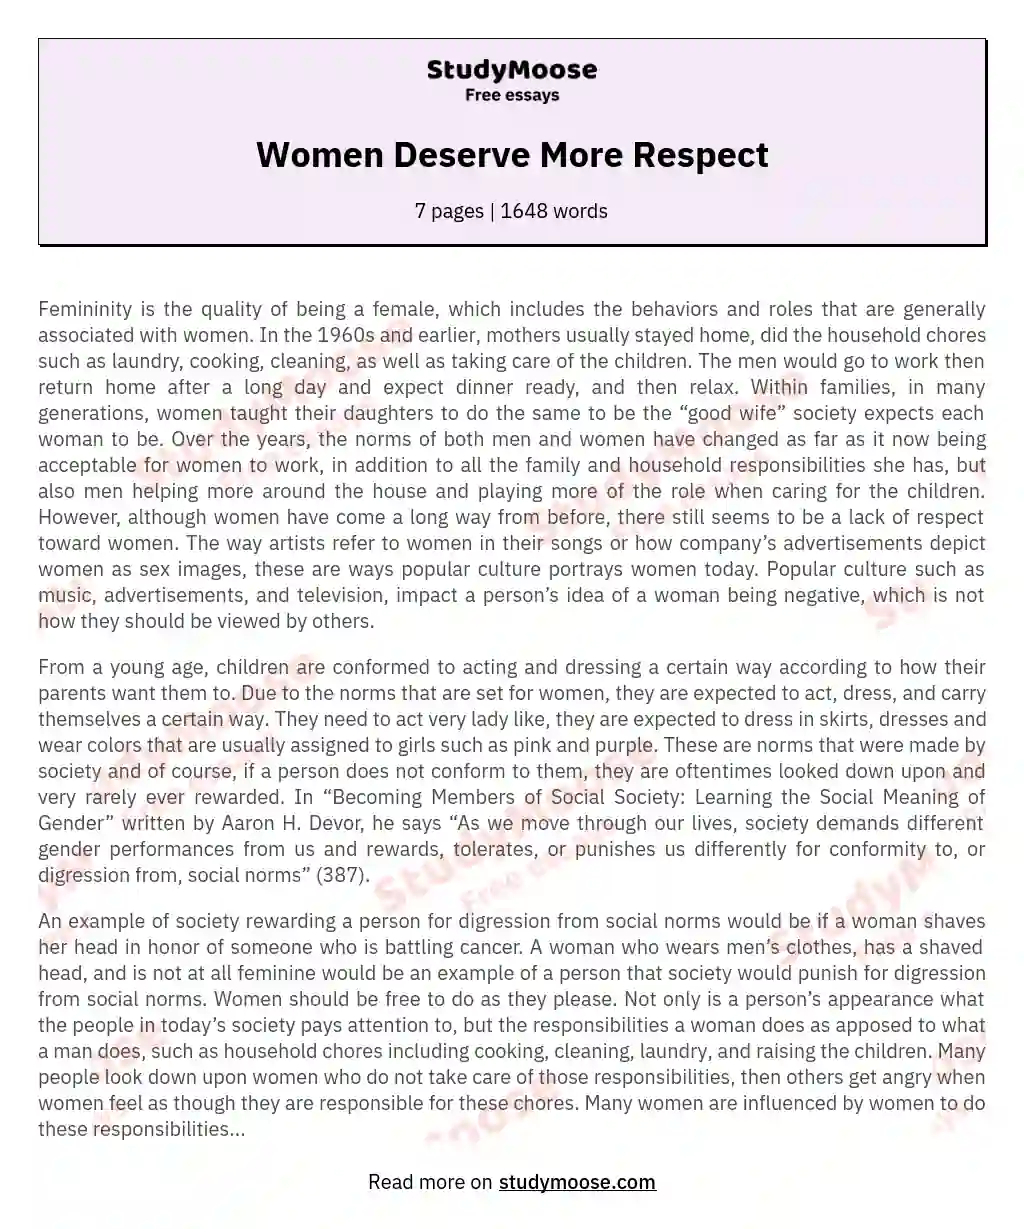 Women Deserve More Respect essay